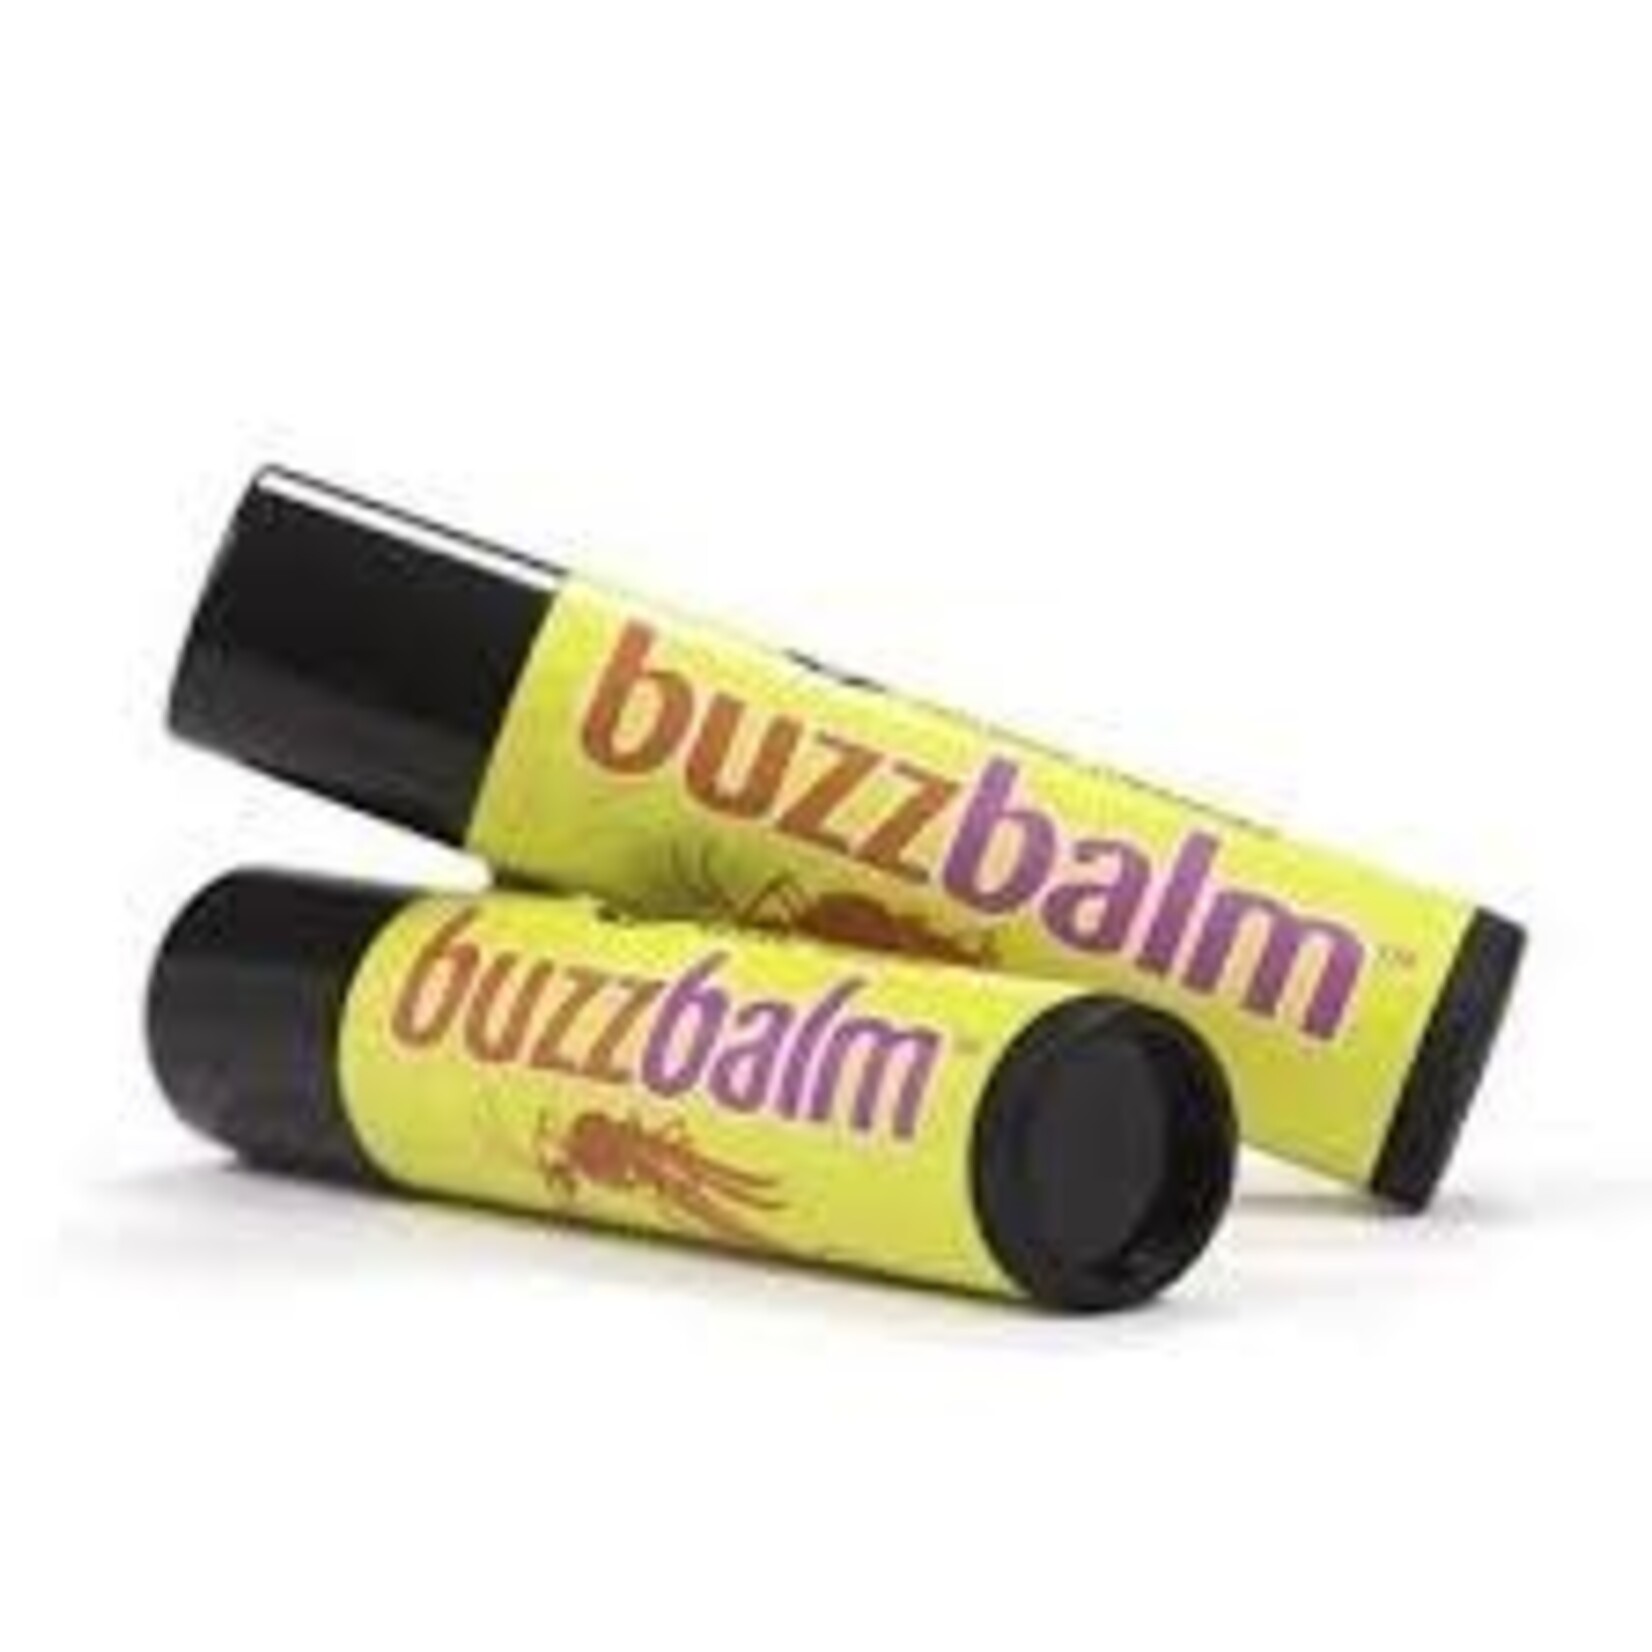 BuzzBalm 4.5g (stop itch)